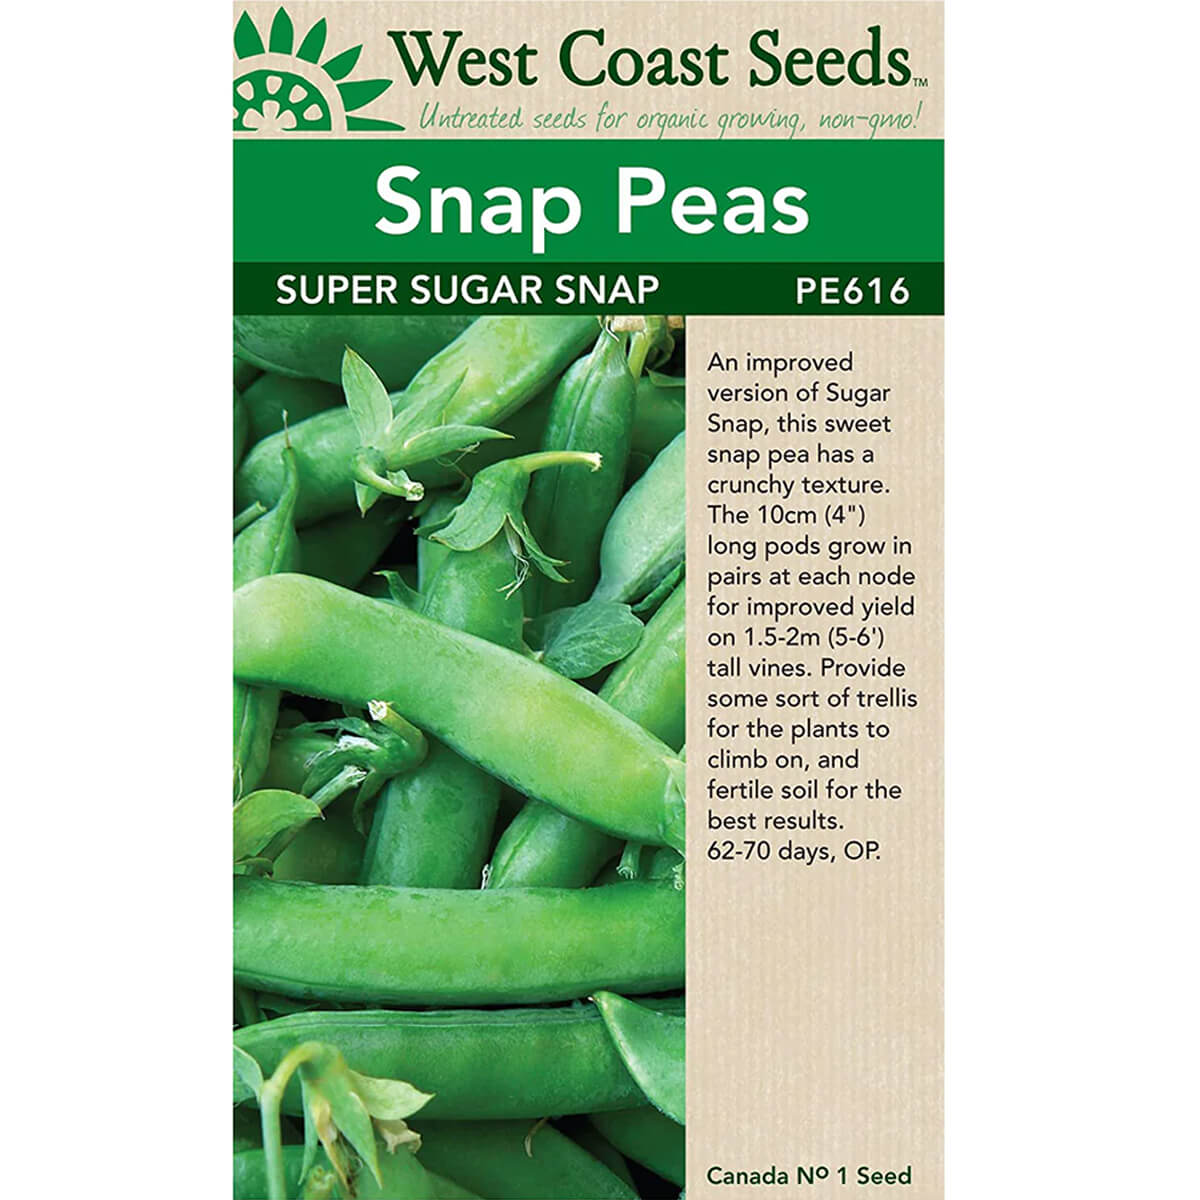 Super Sugar Snap Peas - approx. 107 seeds